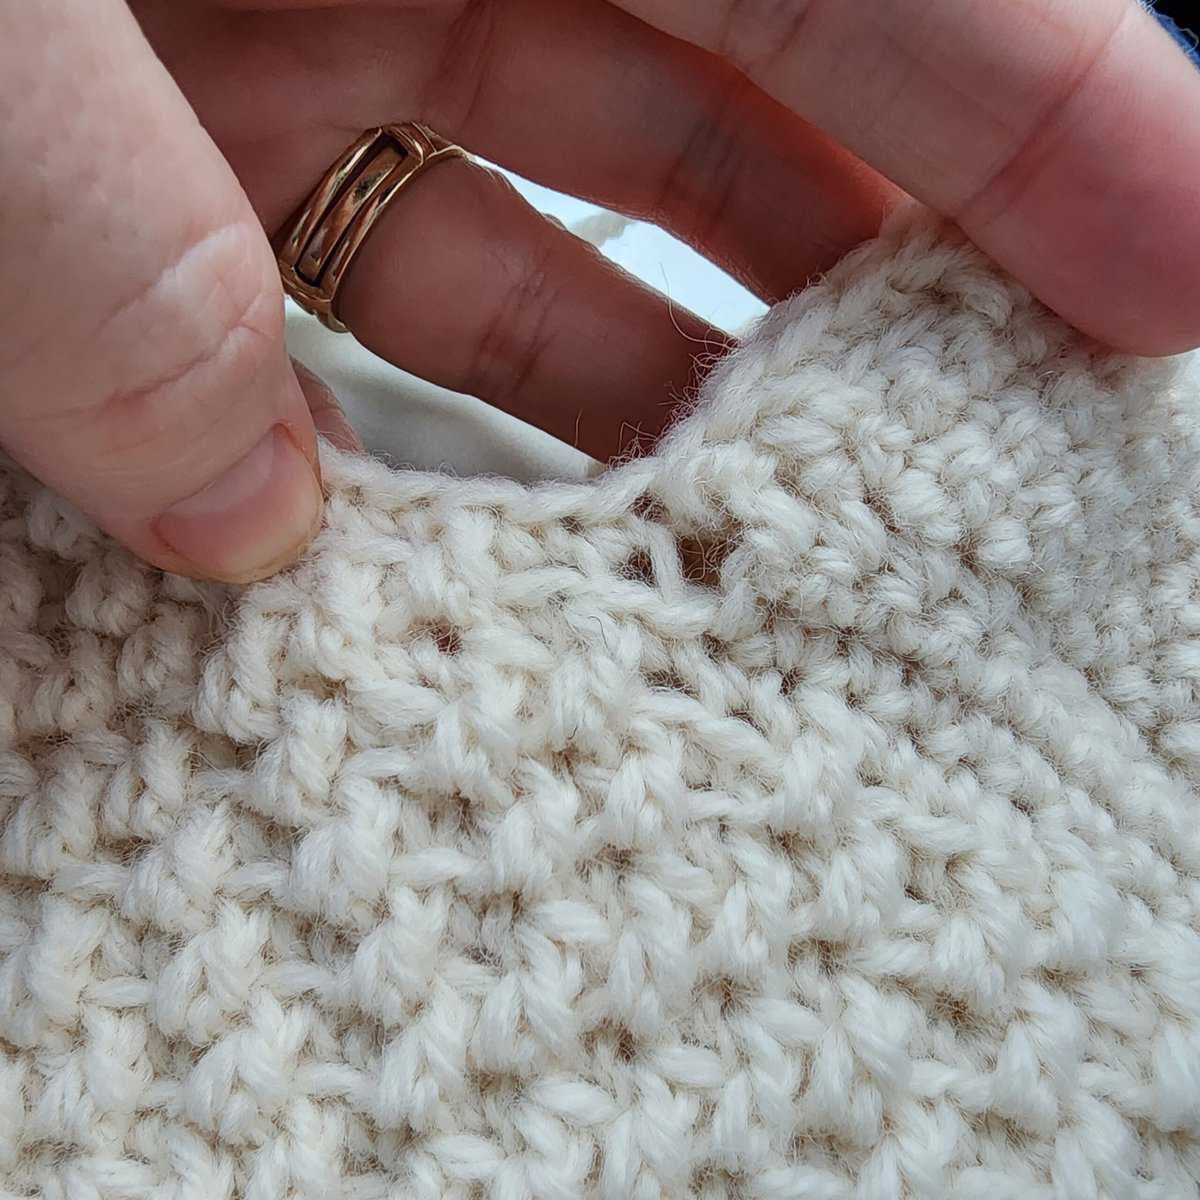 Small gap at heel of crochet stocking.